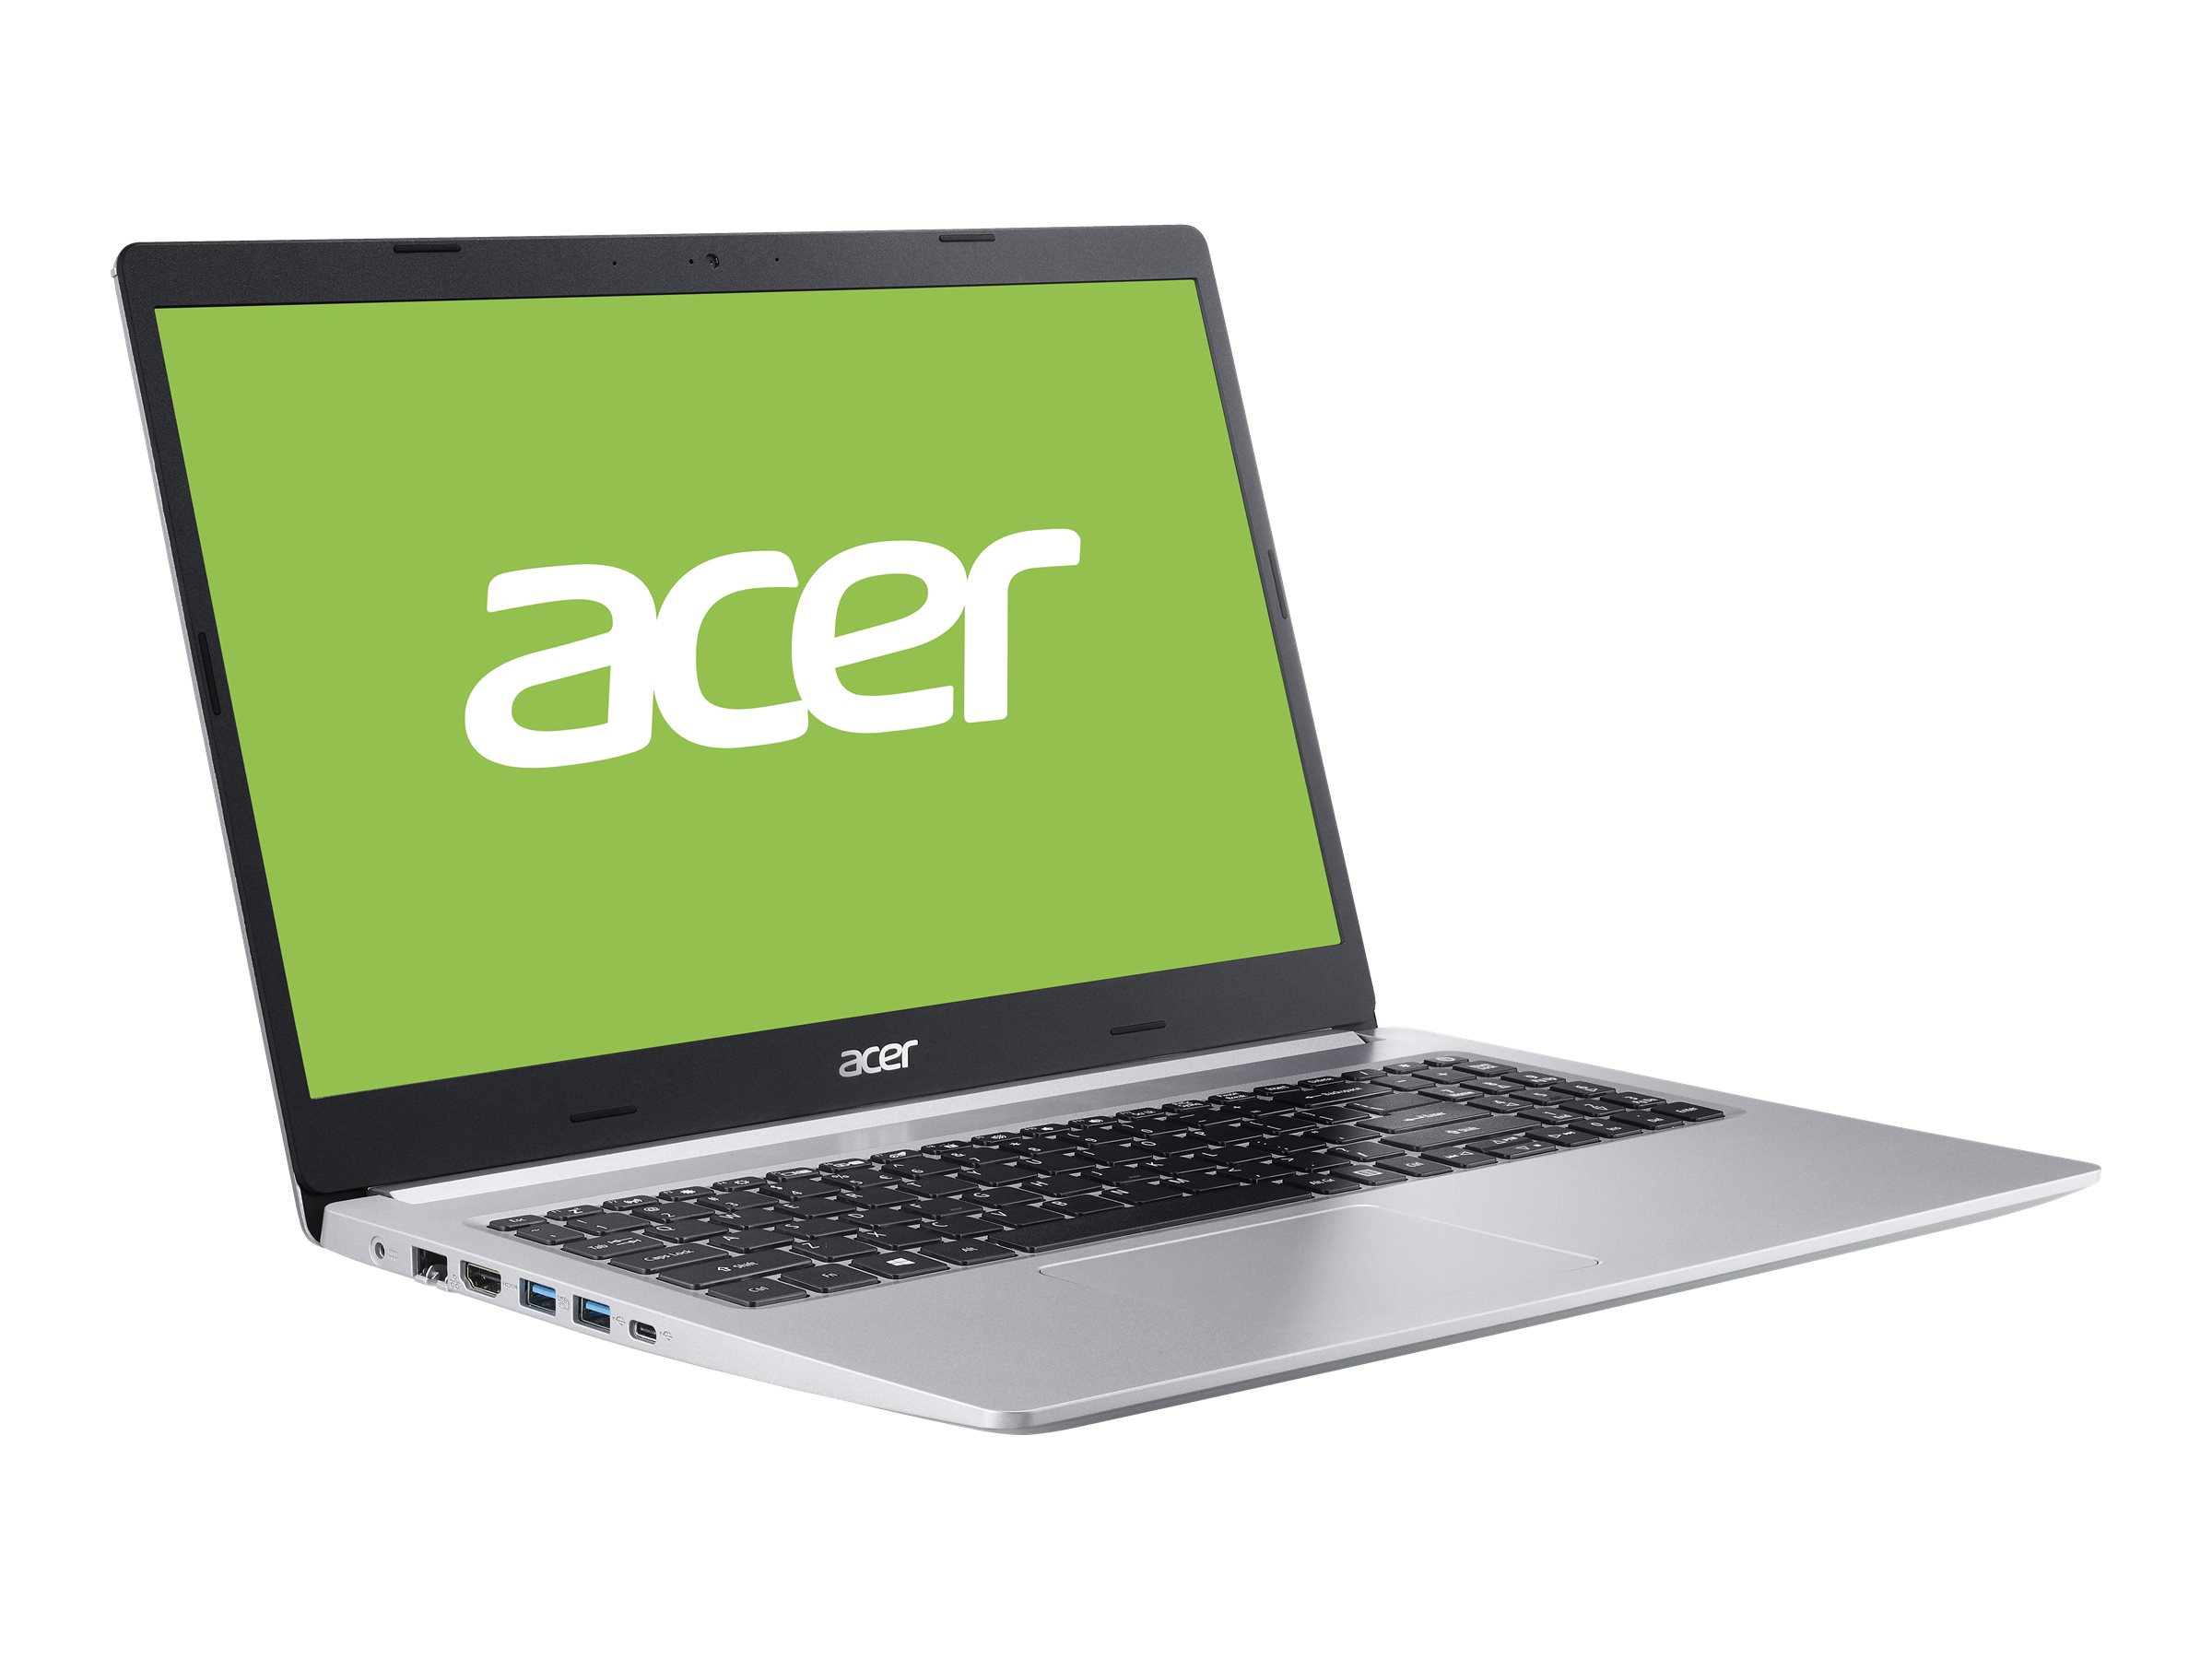 Acer Aspire 5 A515-54-37U3 - Intel Core i3 10110U / 2.1 GHz - Windows 10 Home 64-bit in S mode - UHD Graphics - 4 GB RAM - 128 GB SSD NVMe - 15.6" IPS 1920 x 1080 (Full HD) - Wi-Fi 5 - pure silver - kbd: US Intl - image 3 of 7